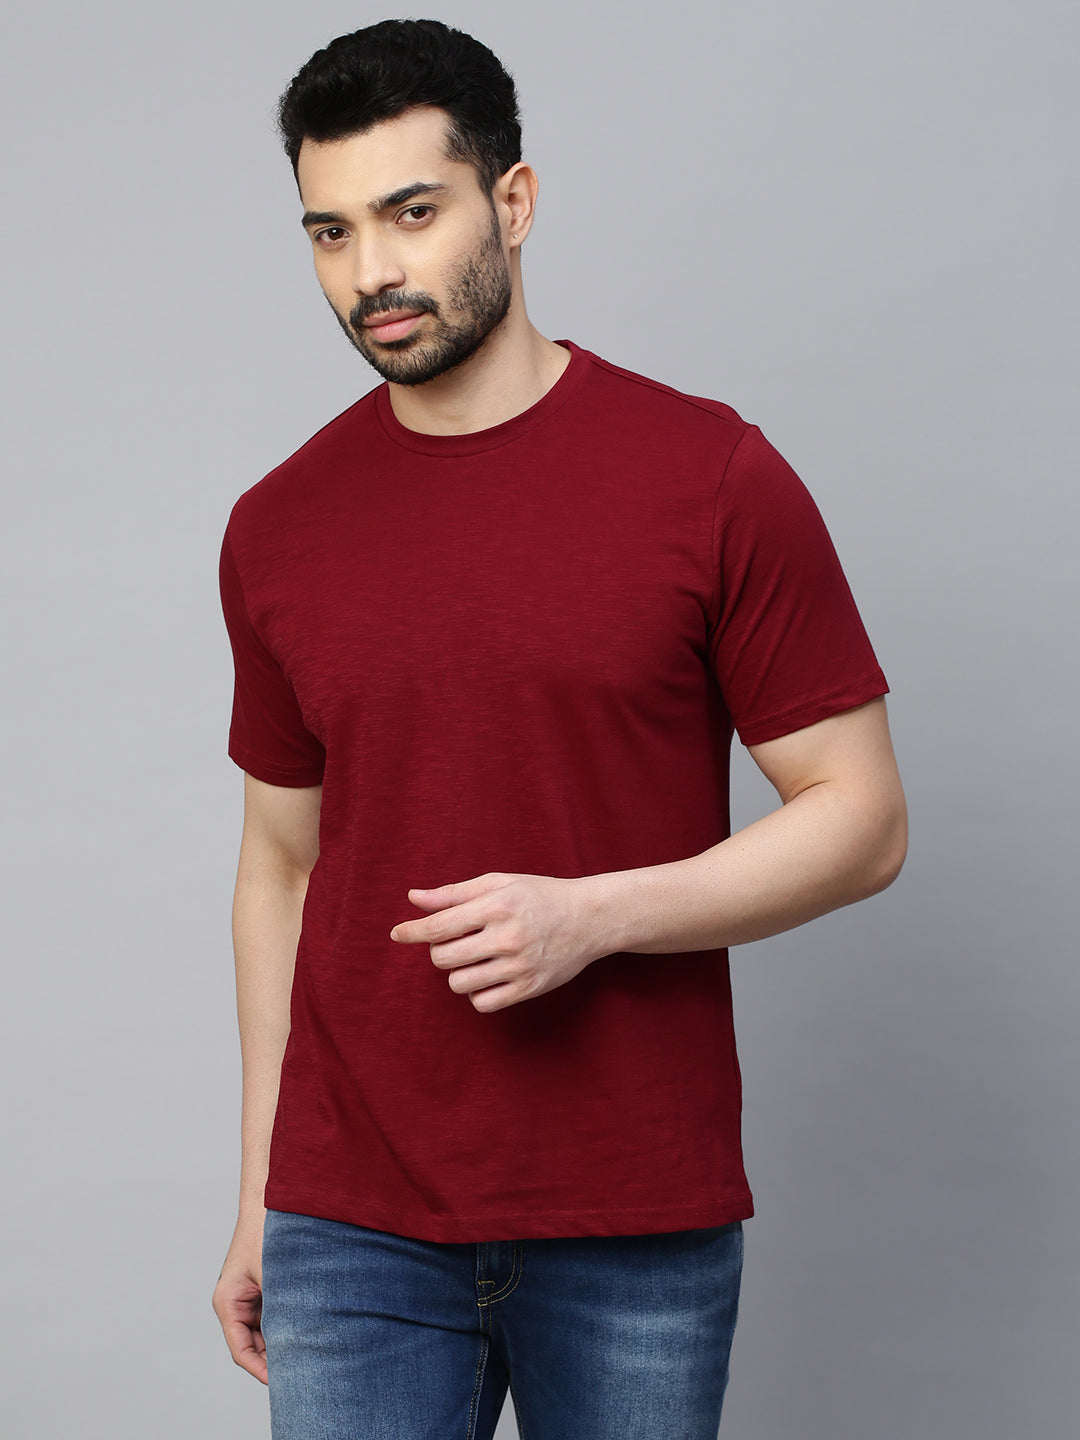 Men's Cotton Red Regular Fit Tshirt